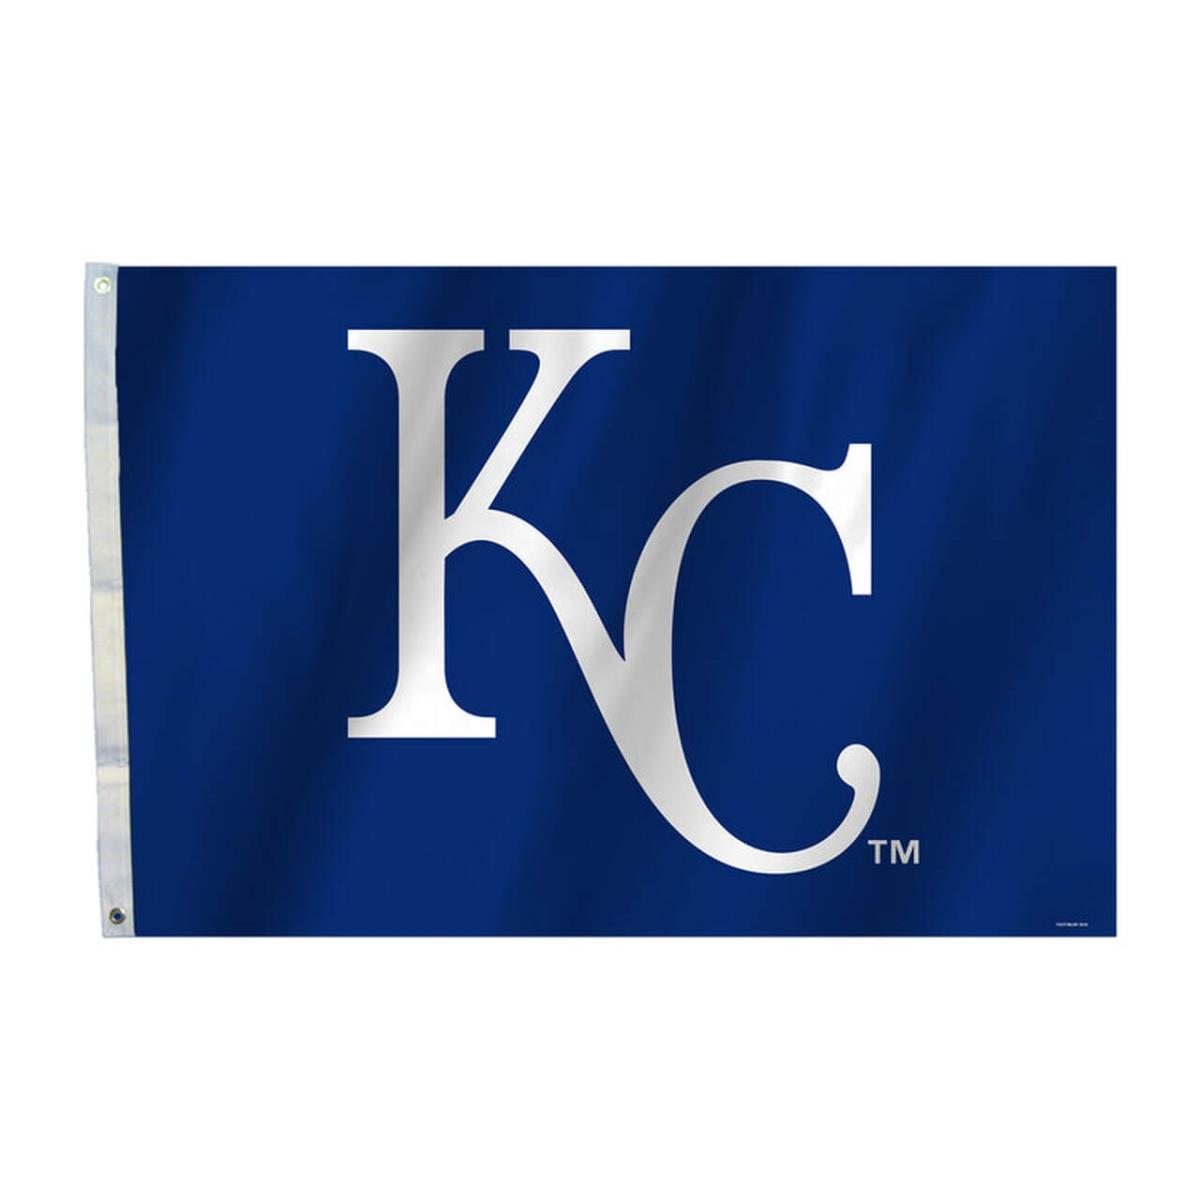 Picture of Fremont Die 2324562007 2 x 3 ft. Kansas City Royals Flag